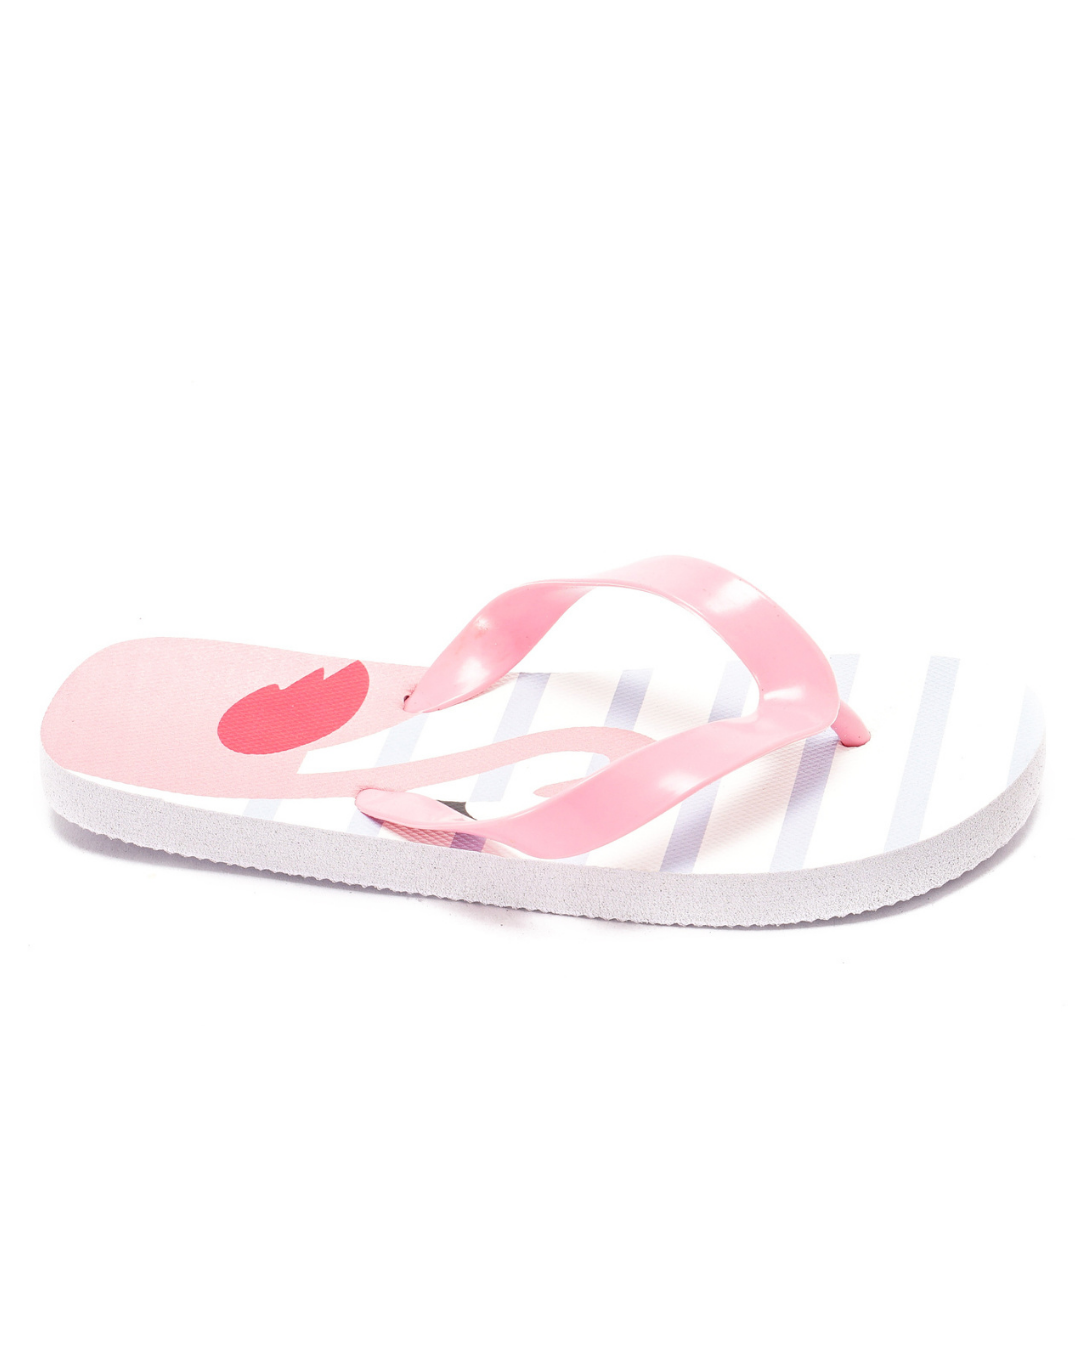 My children's slipper is a flamingo